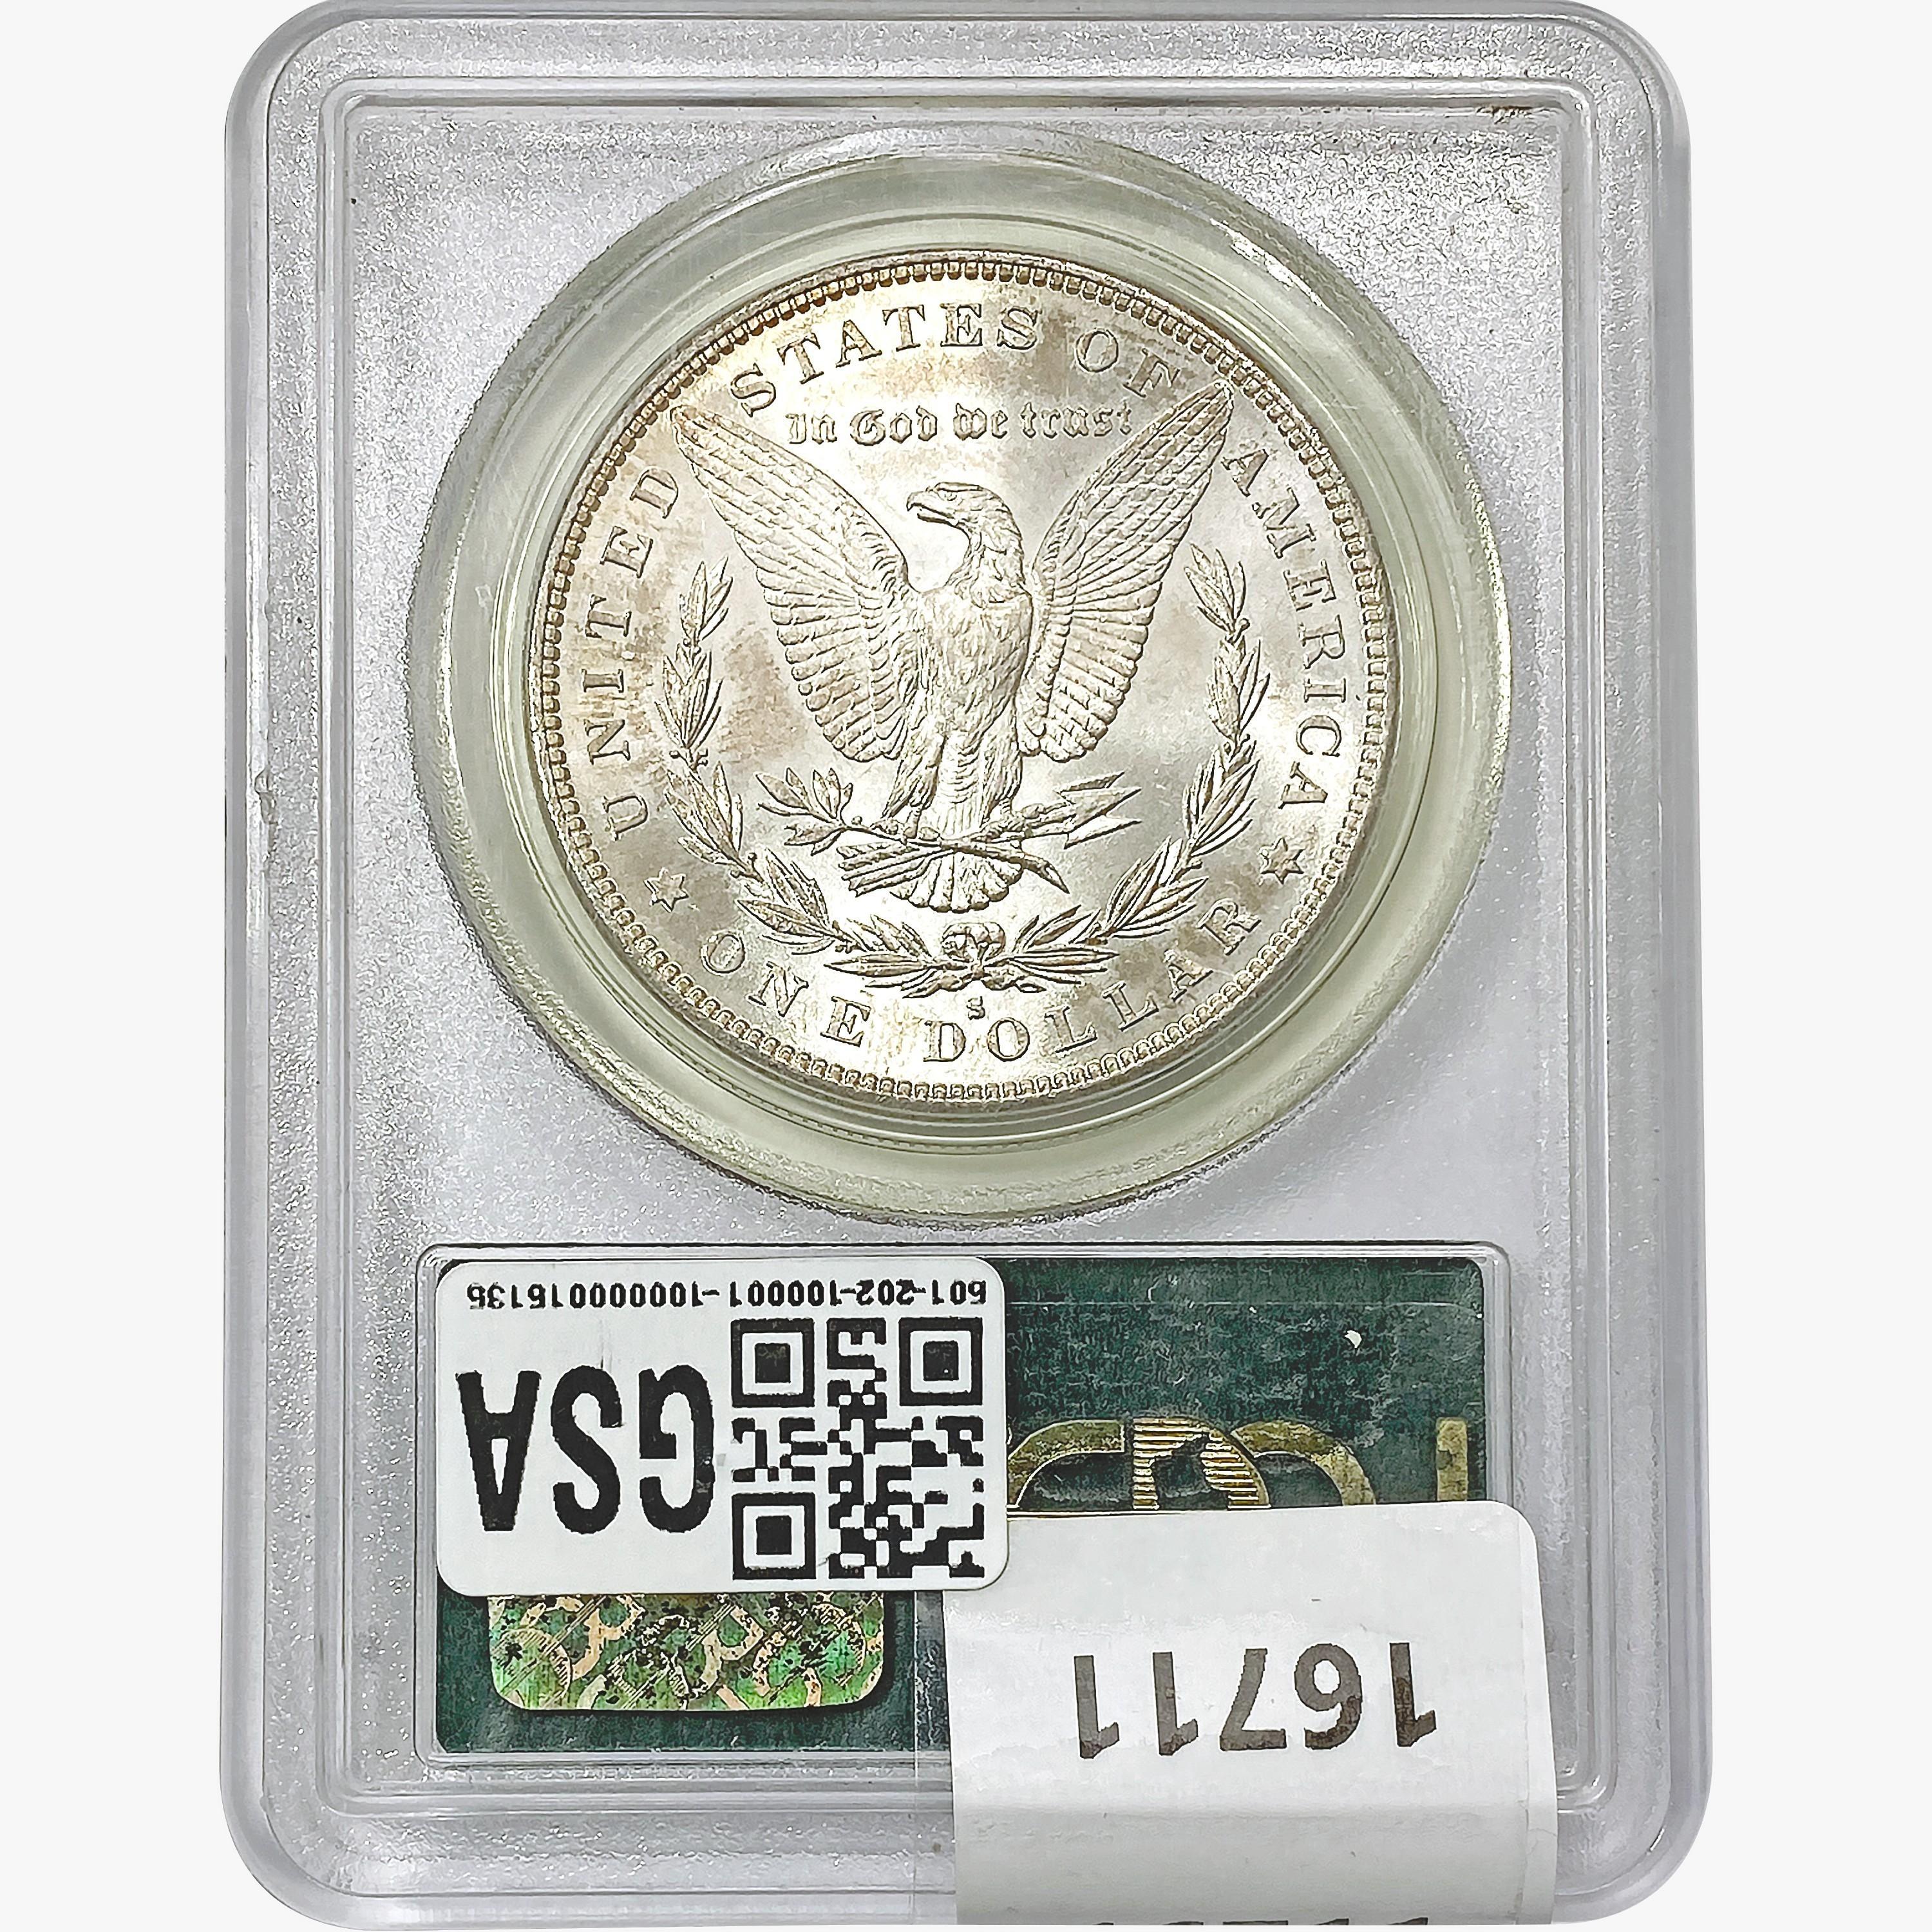 1882-S Morgan Silver Dollar PCGS MS66